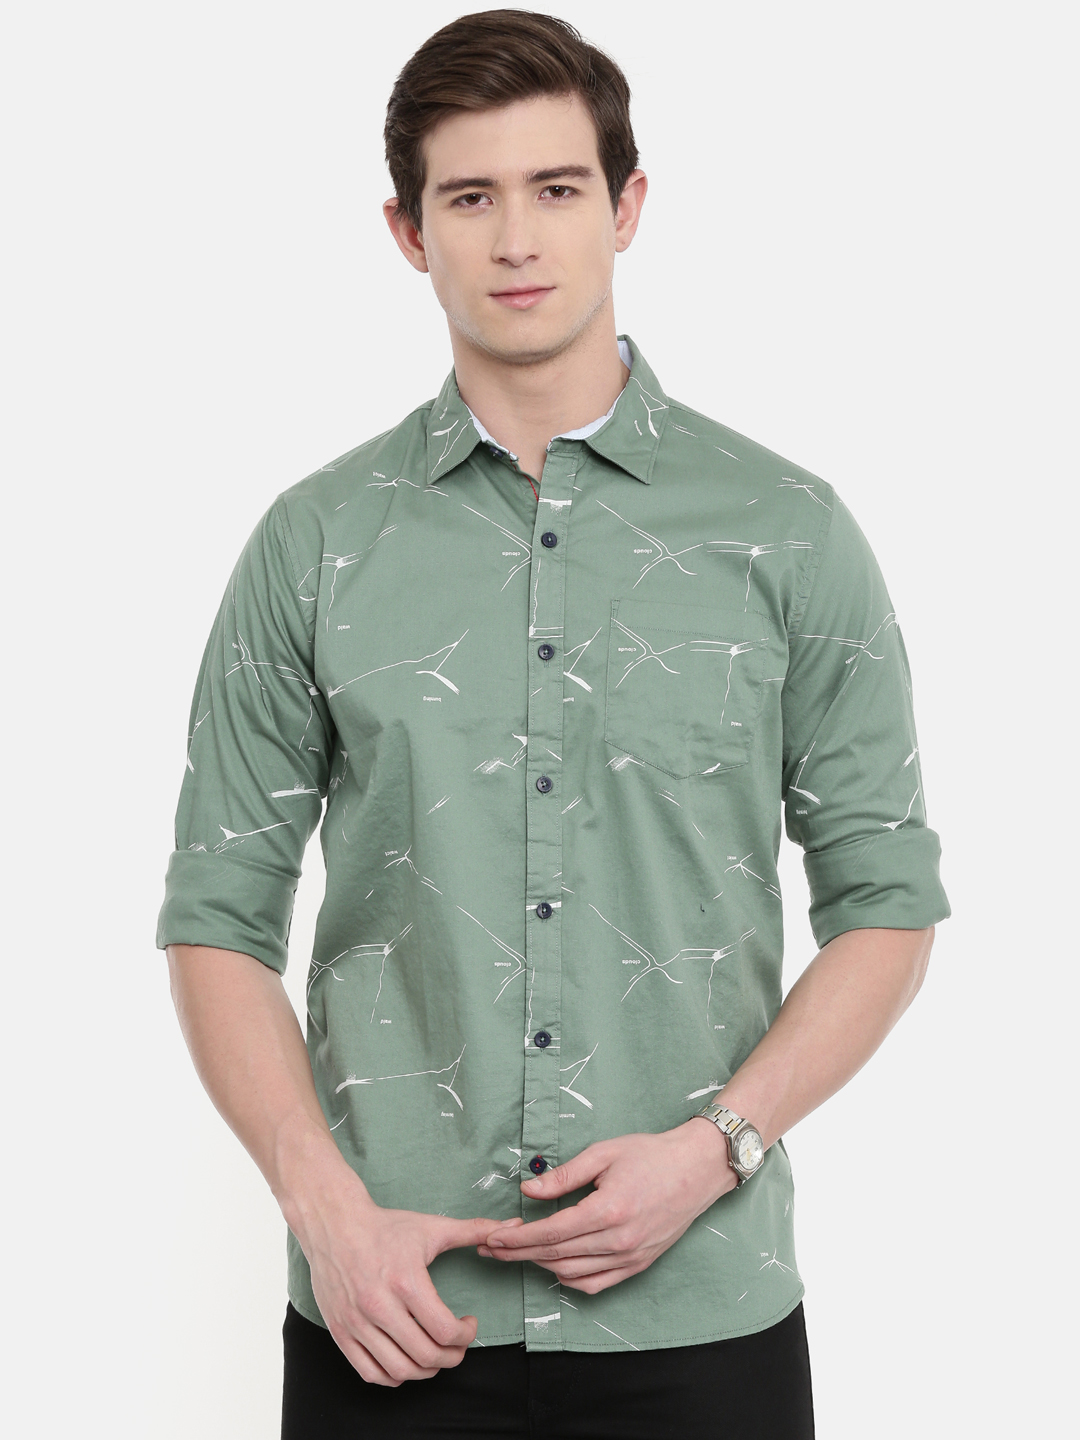 Buy Seta Men's Green Printed Casual Shirts Online @ ₹719 from ShopClues